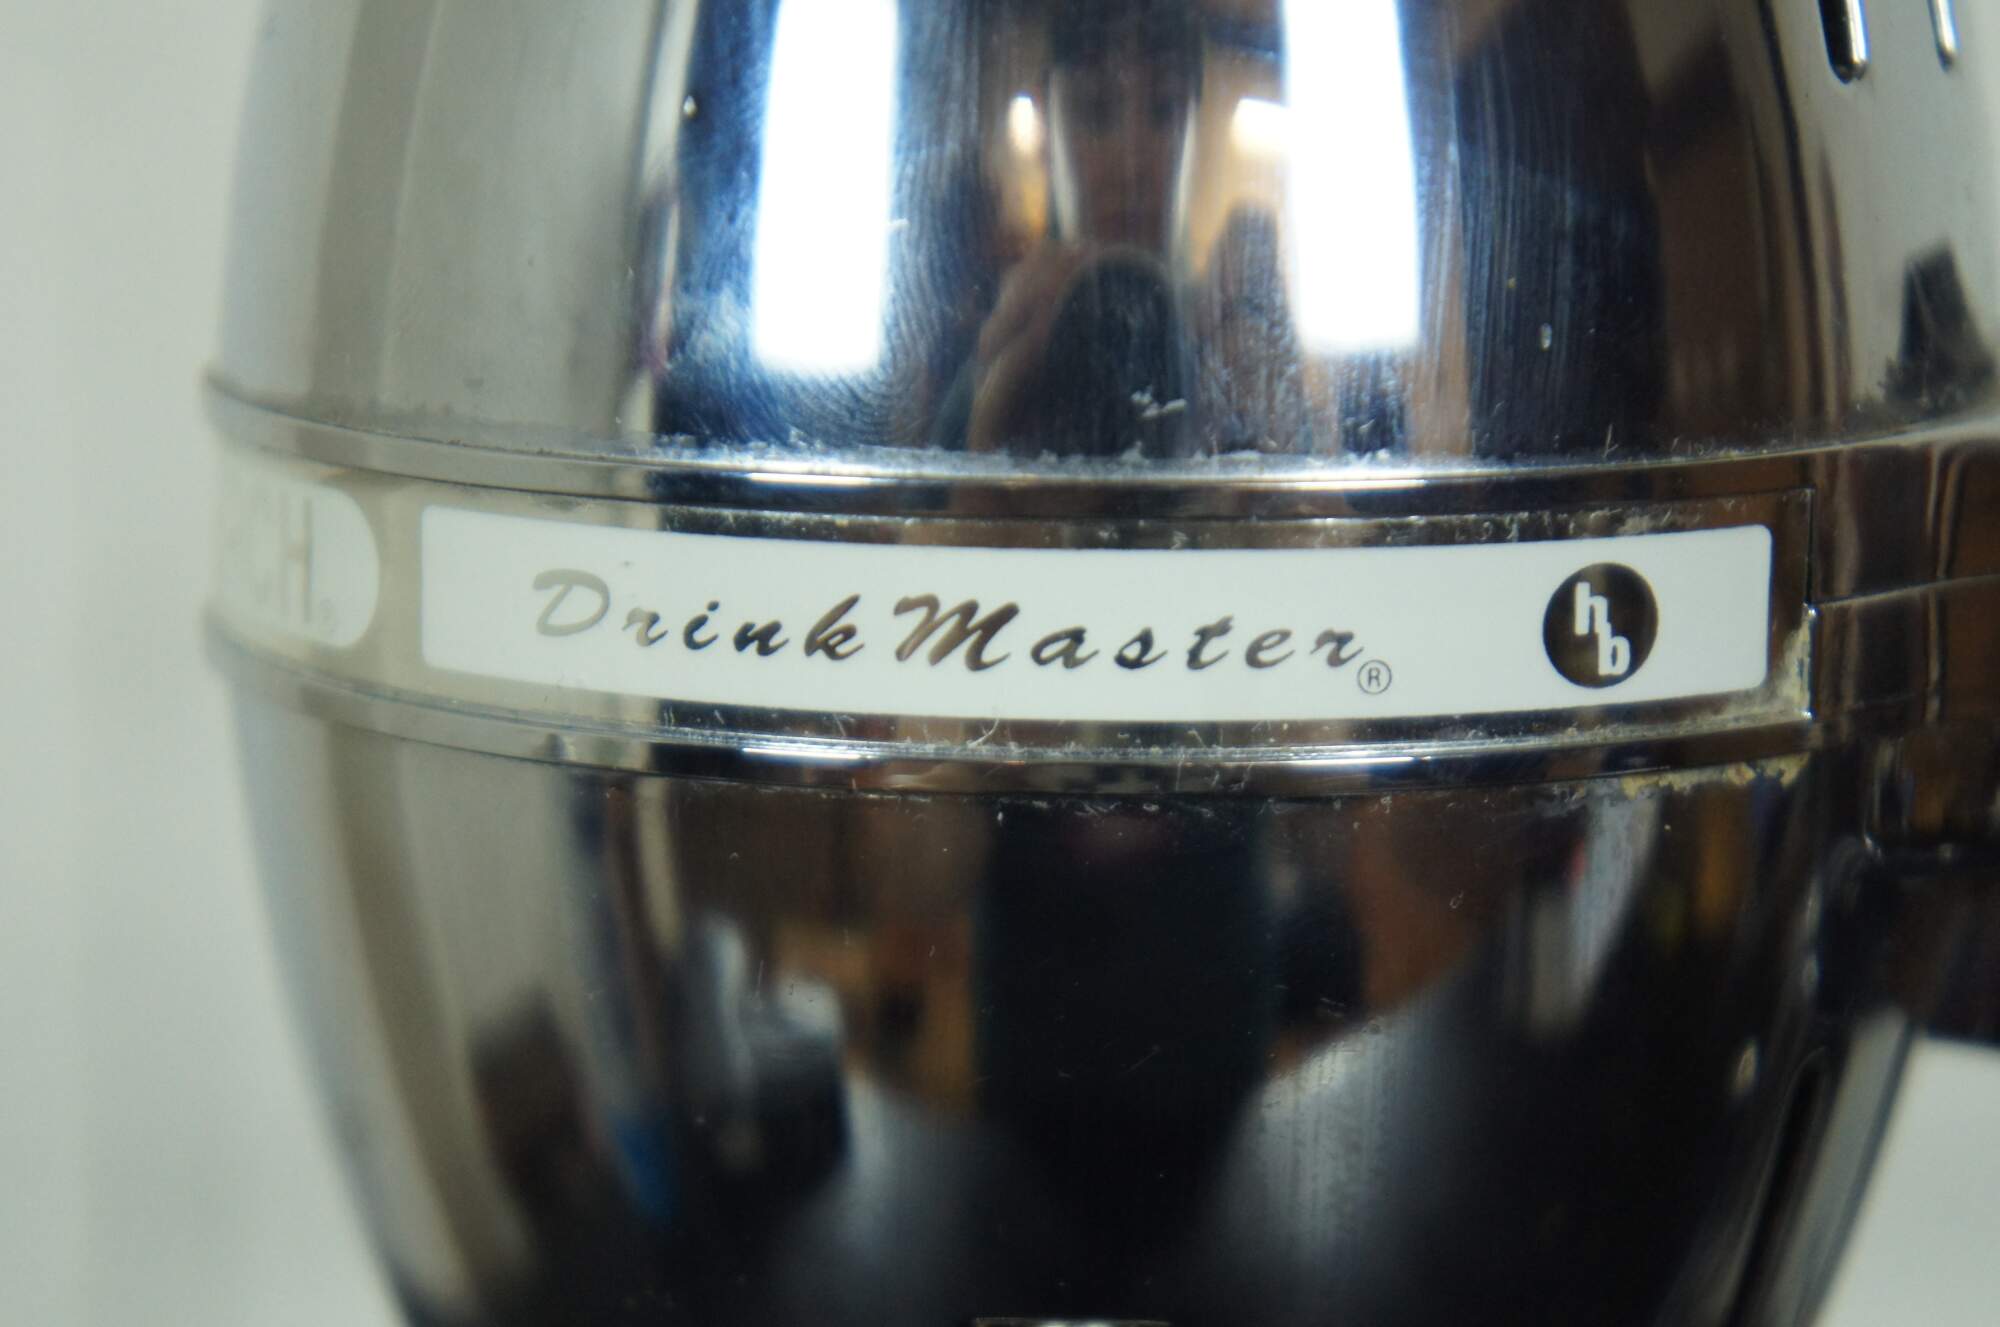 Vintage Hamilton Beach Milkshake Mixer Classic Drink Master in